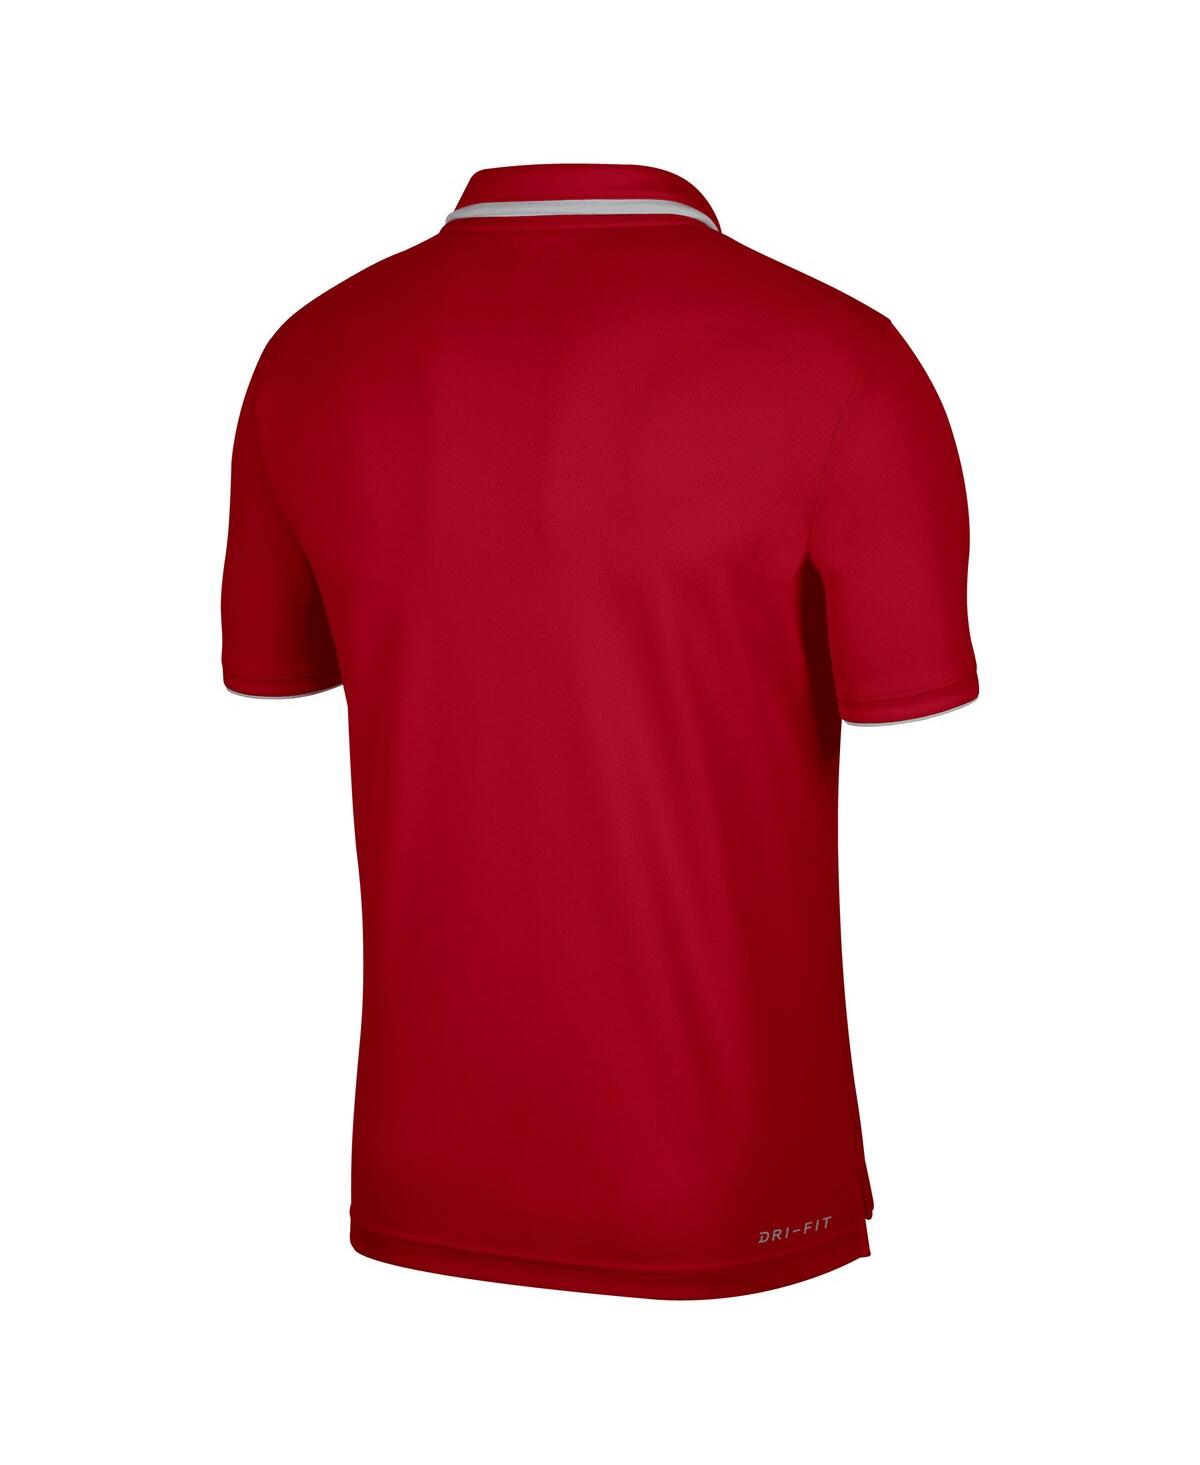 Shop Nike Men's  Red Georgia Bulldogs Wordmark Performance Polo Shirt